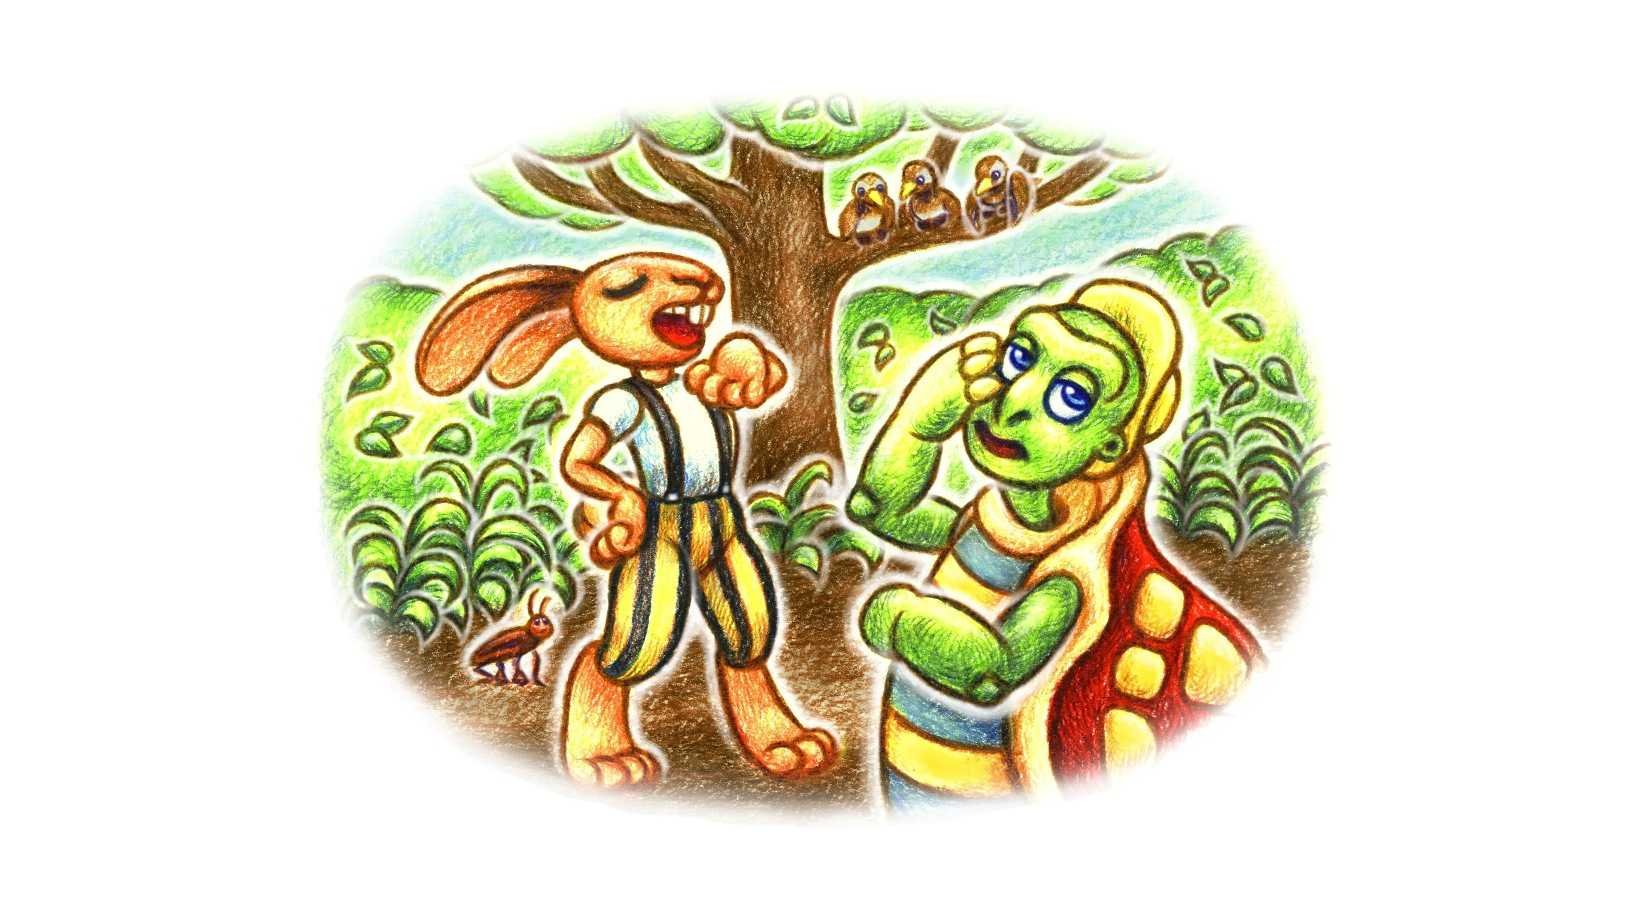 Рассказ заяц и черепаха. Ингушская сказка заяц и черепаха. Заяц и черепаха Ингушская народная сказка. Заяц и черепаха. Иллюстрация заяц и черепаха.